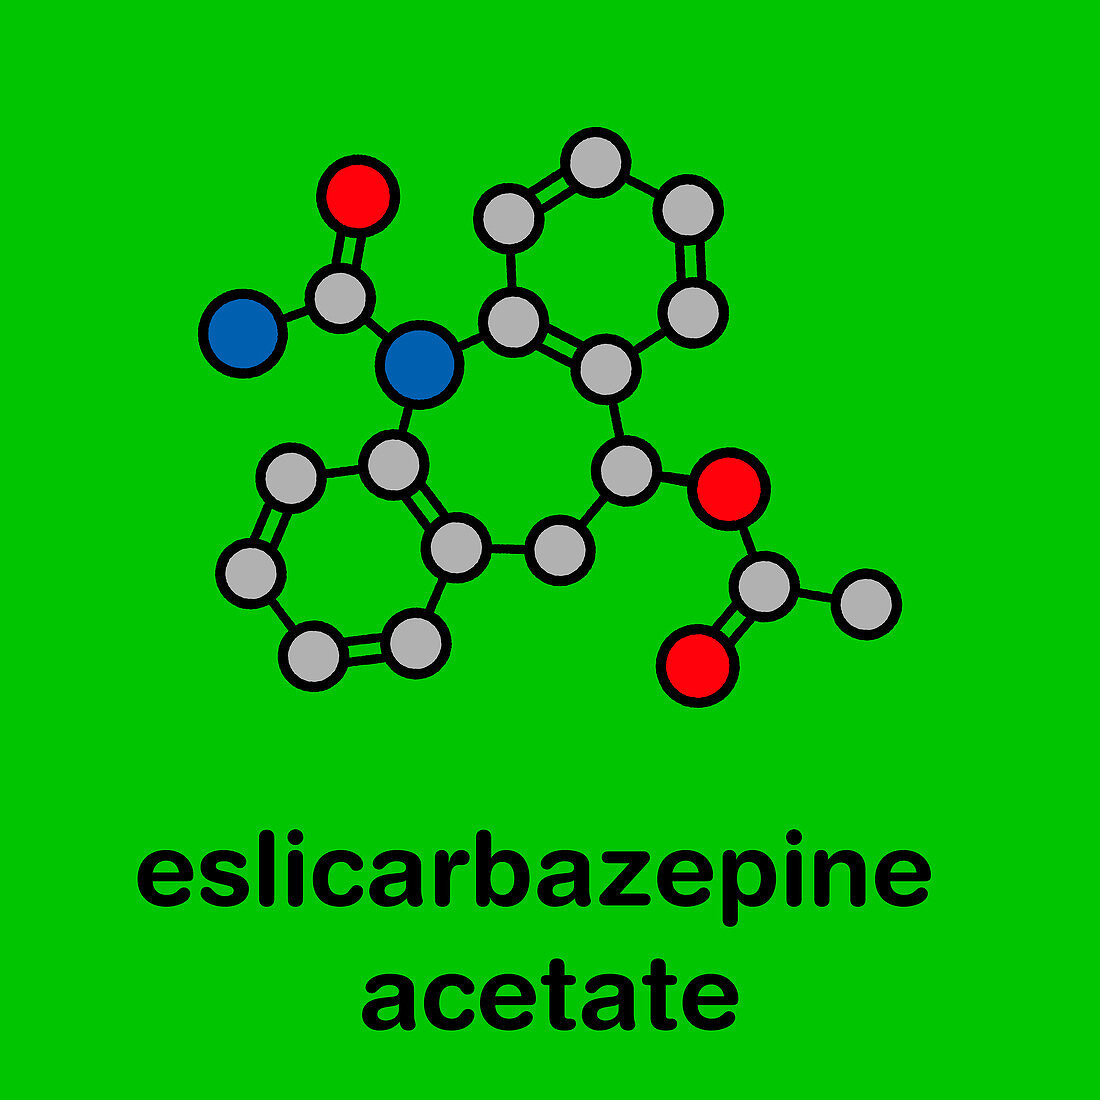 Eslicarbazepine acetate epilepsy drug, molecular model